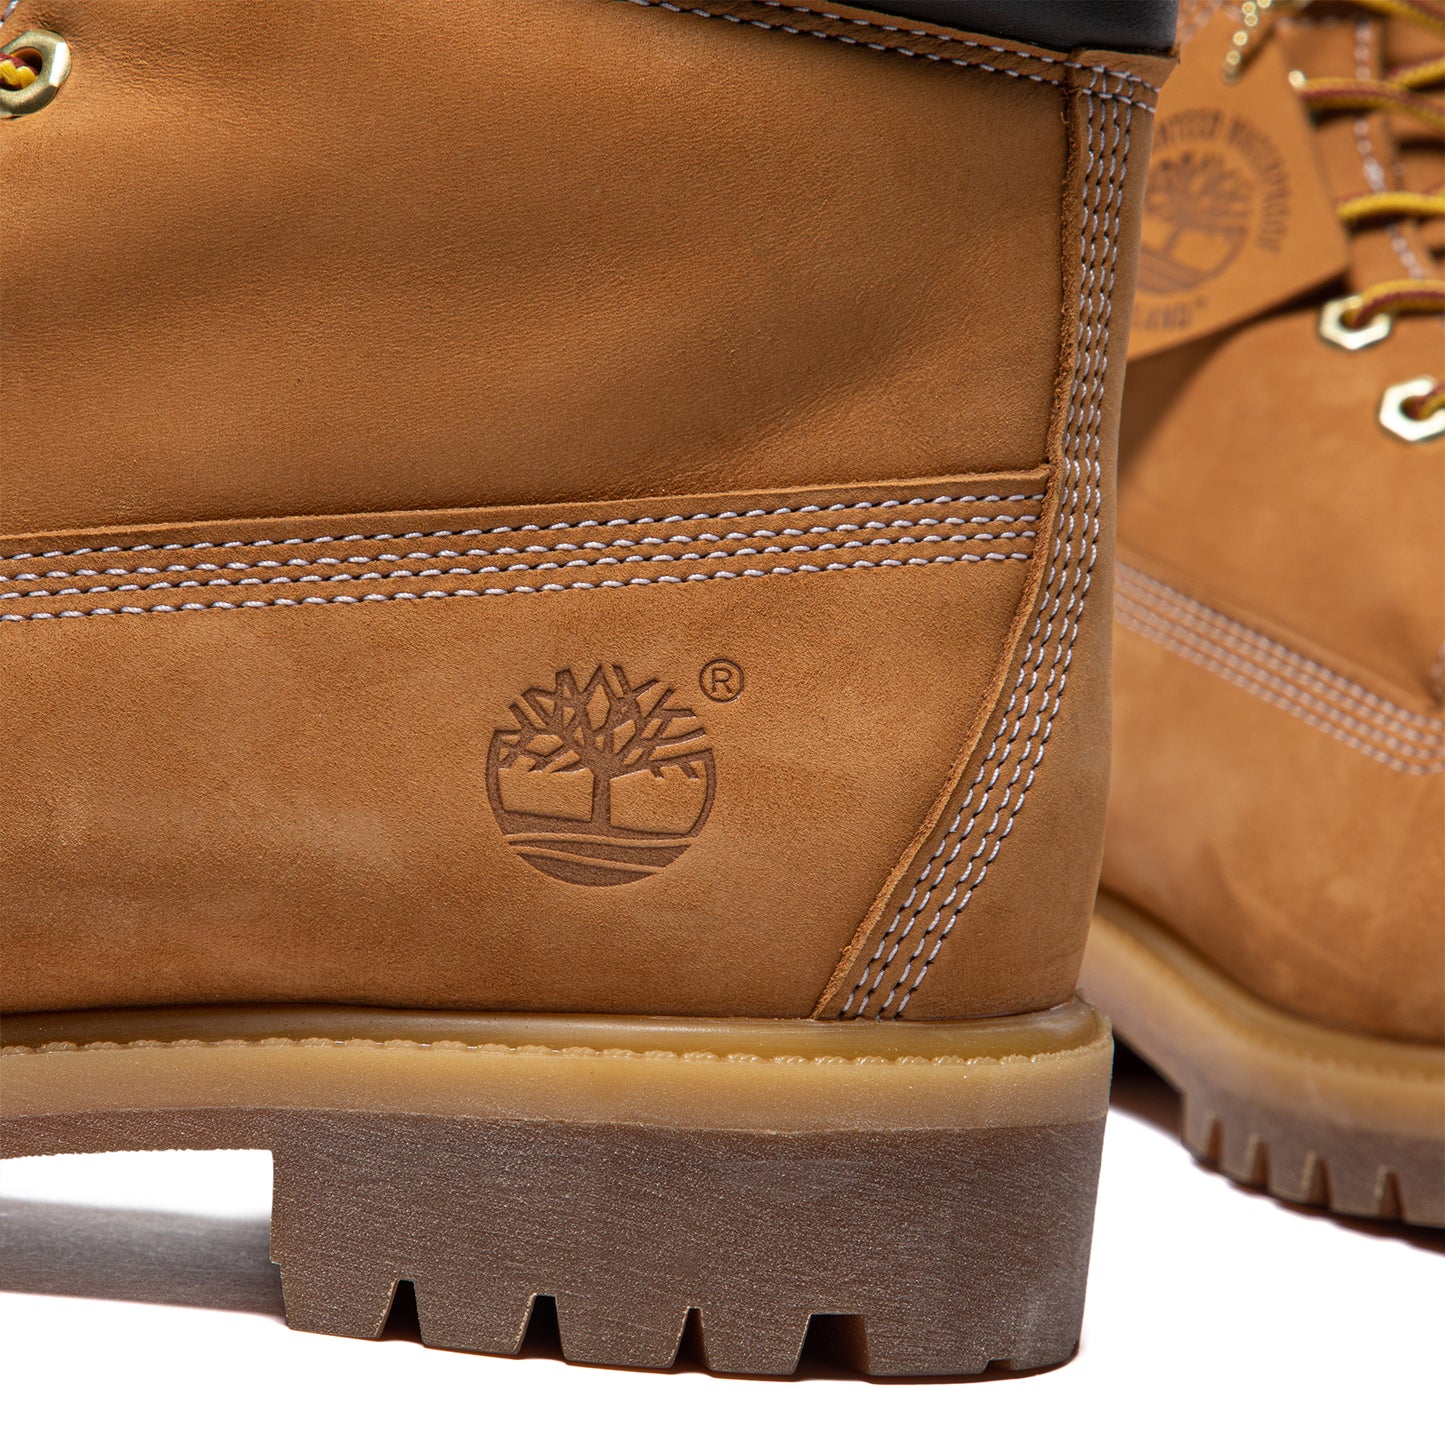 Timberland Premium 6 inch Boots (Wheat)